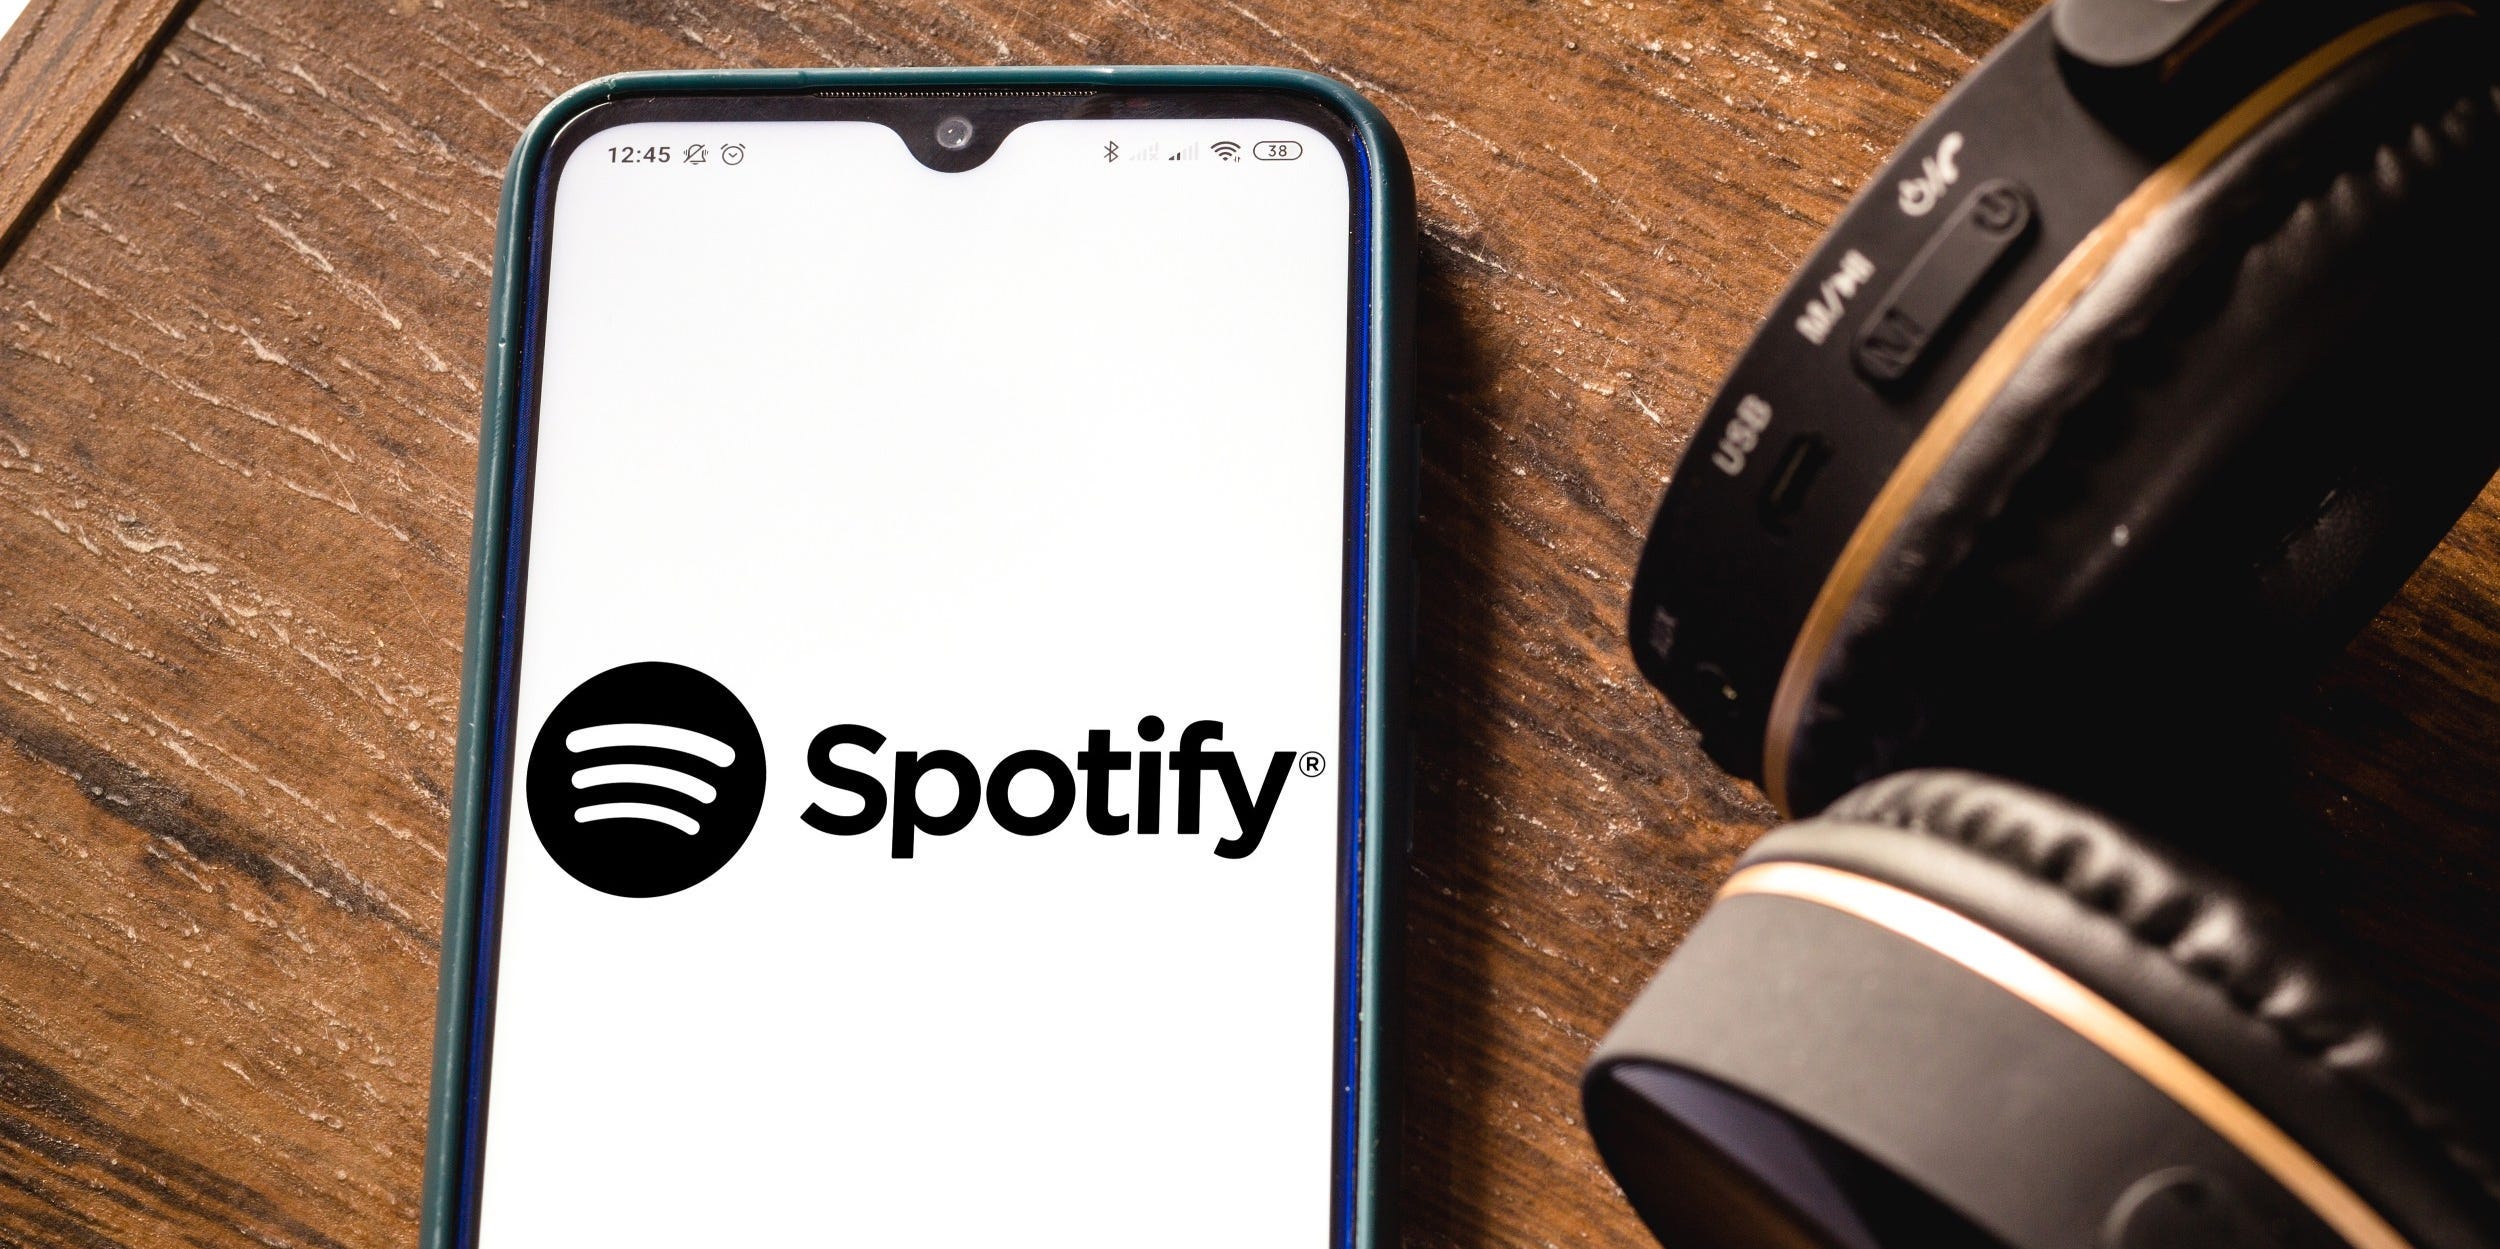 Spotify app and headphones